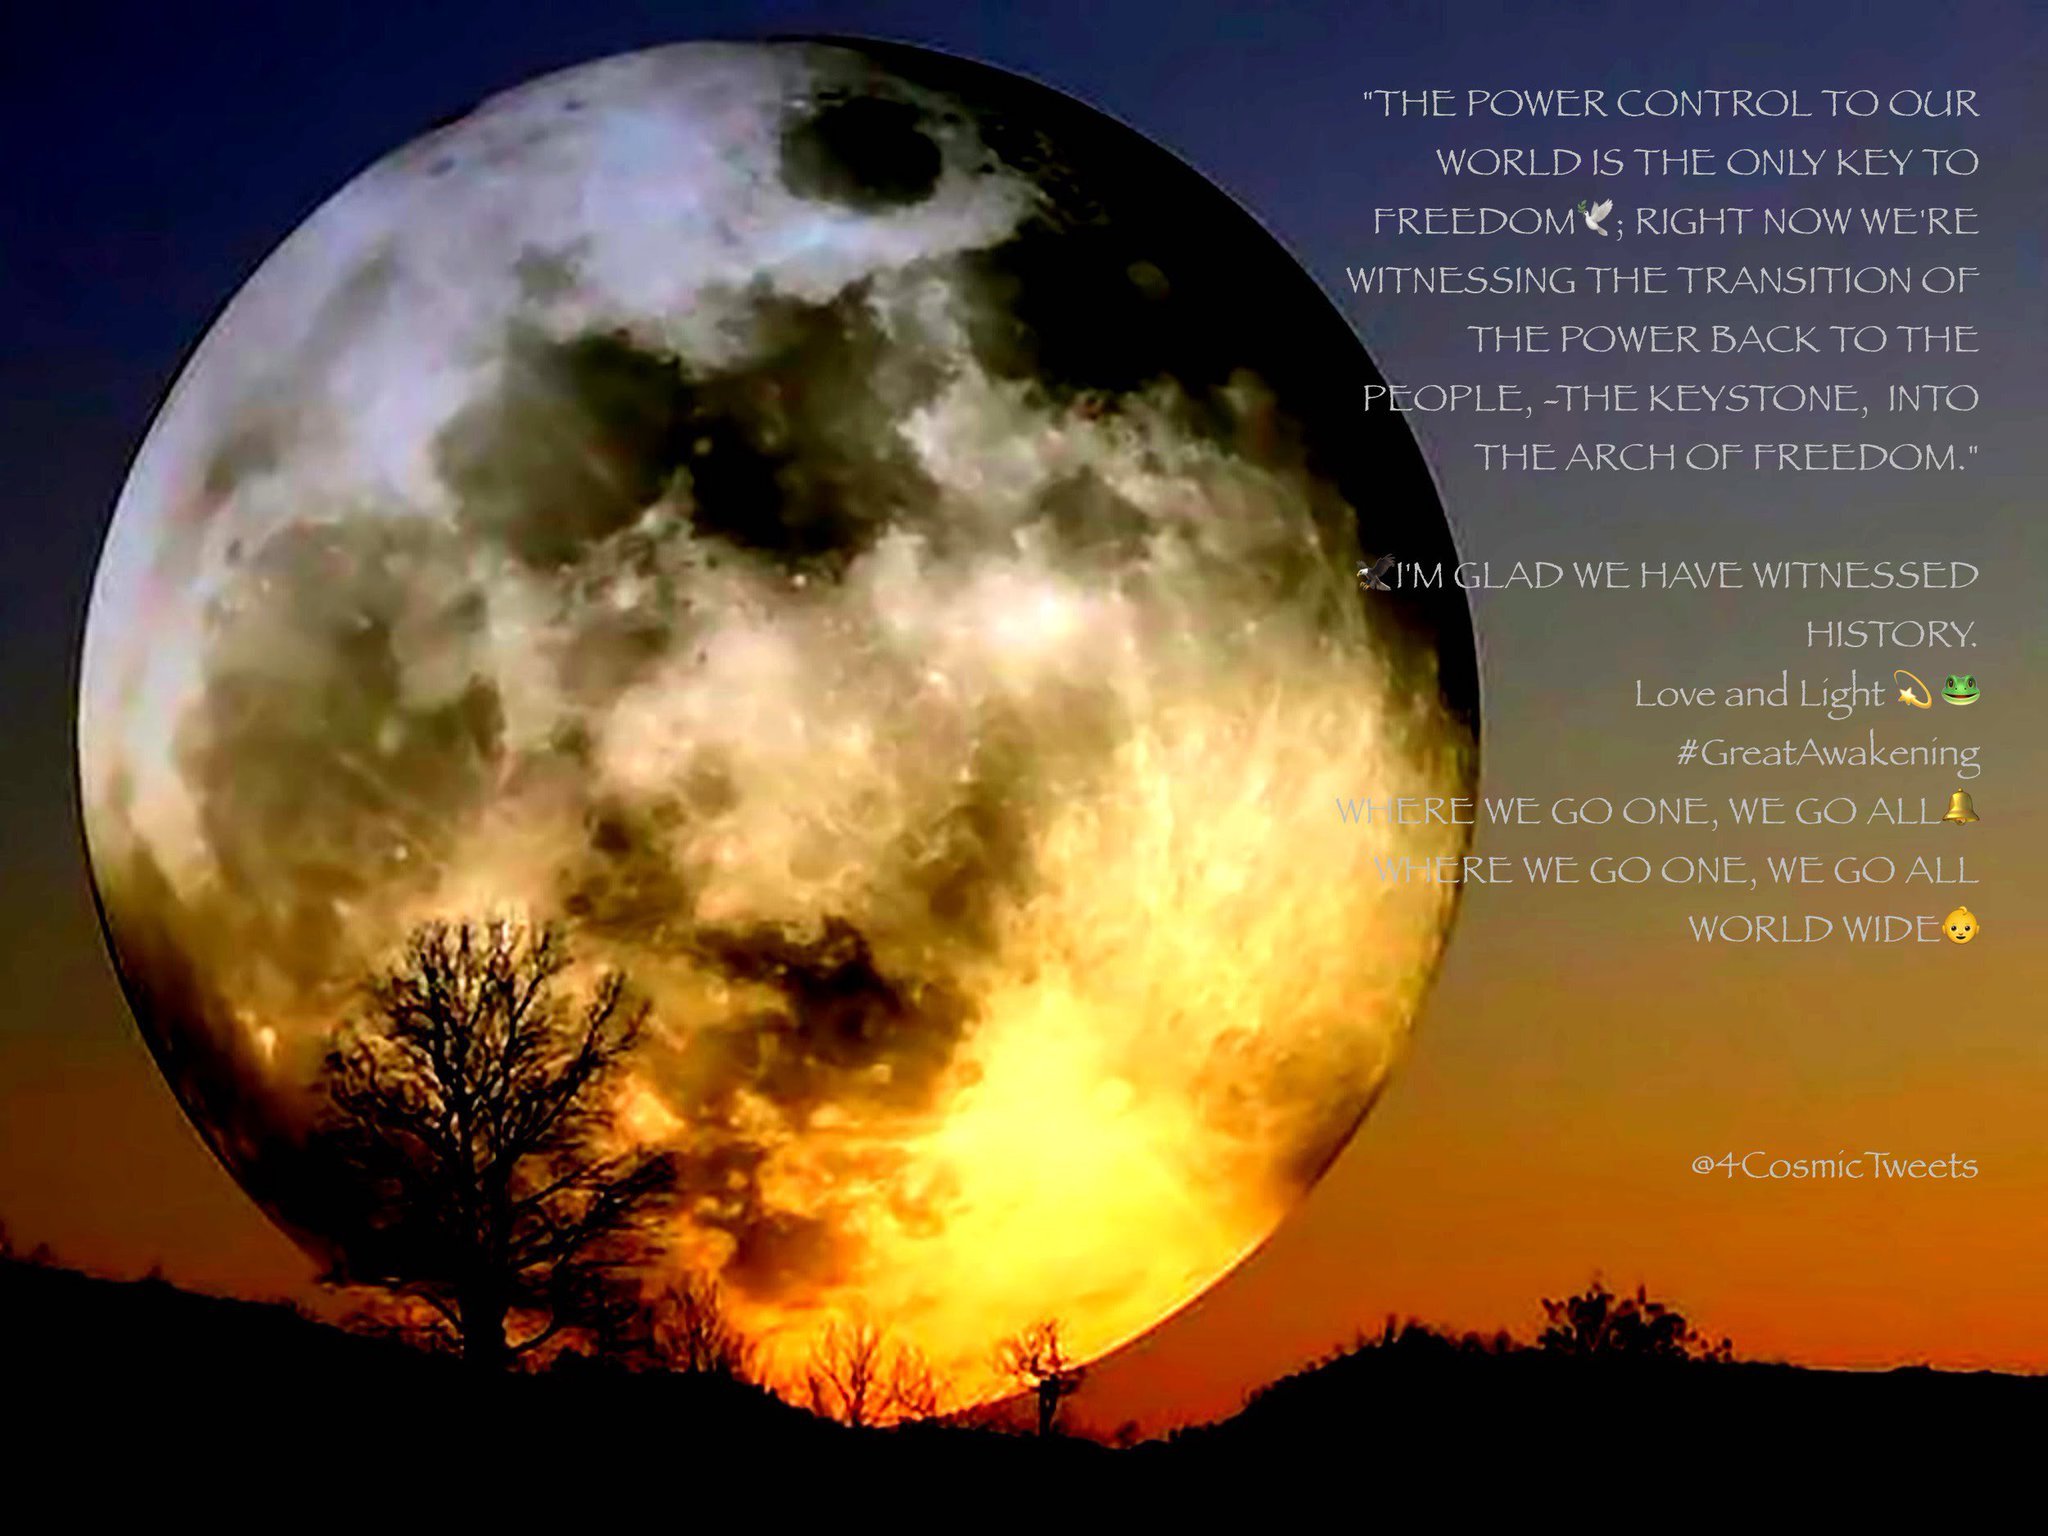 The moon is beautiful. Огромная Луна. Красивая Луна. Луна полнолуние. Красивая большая Луна.